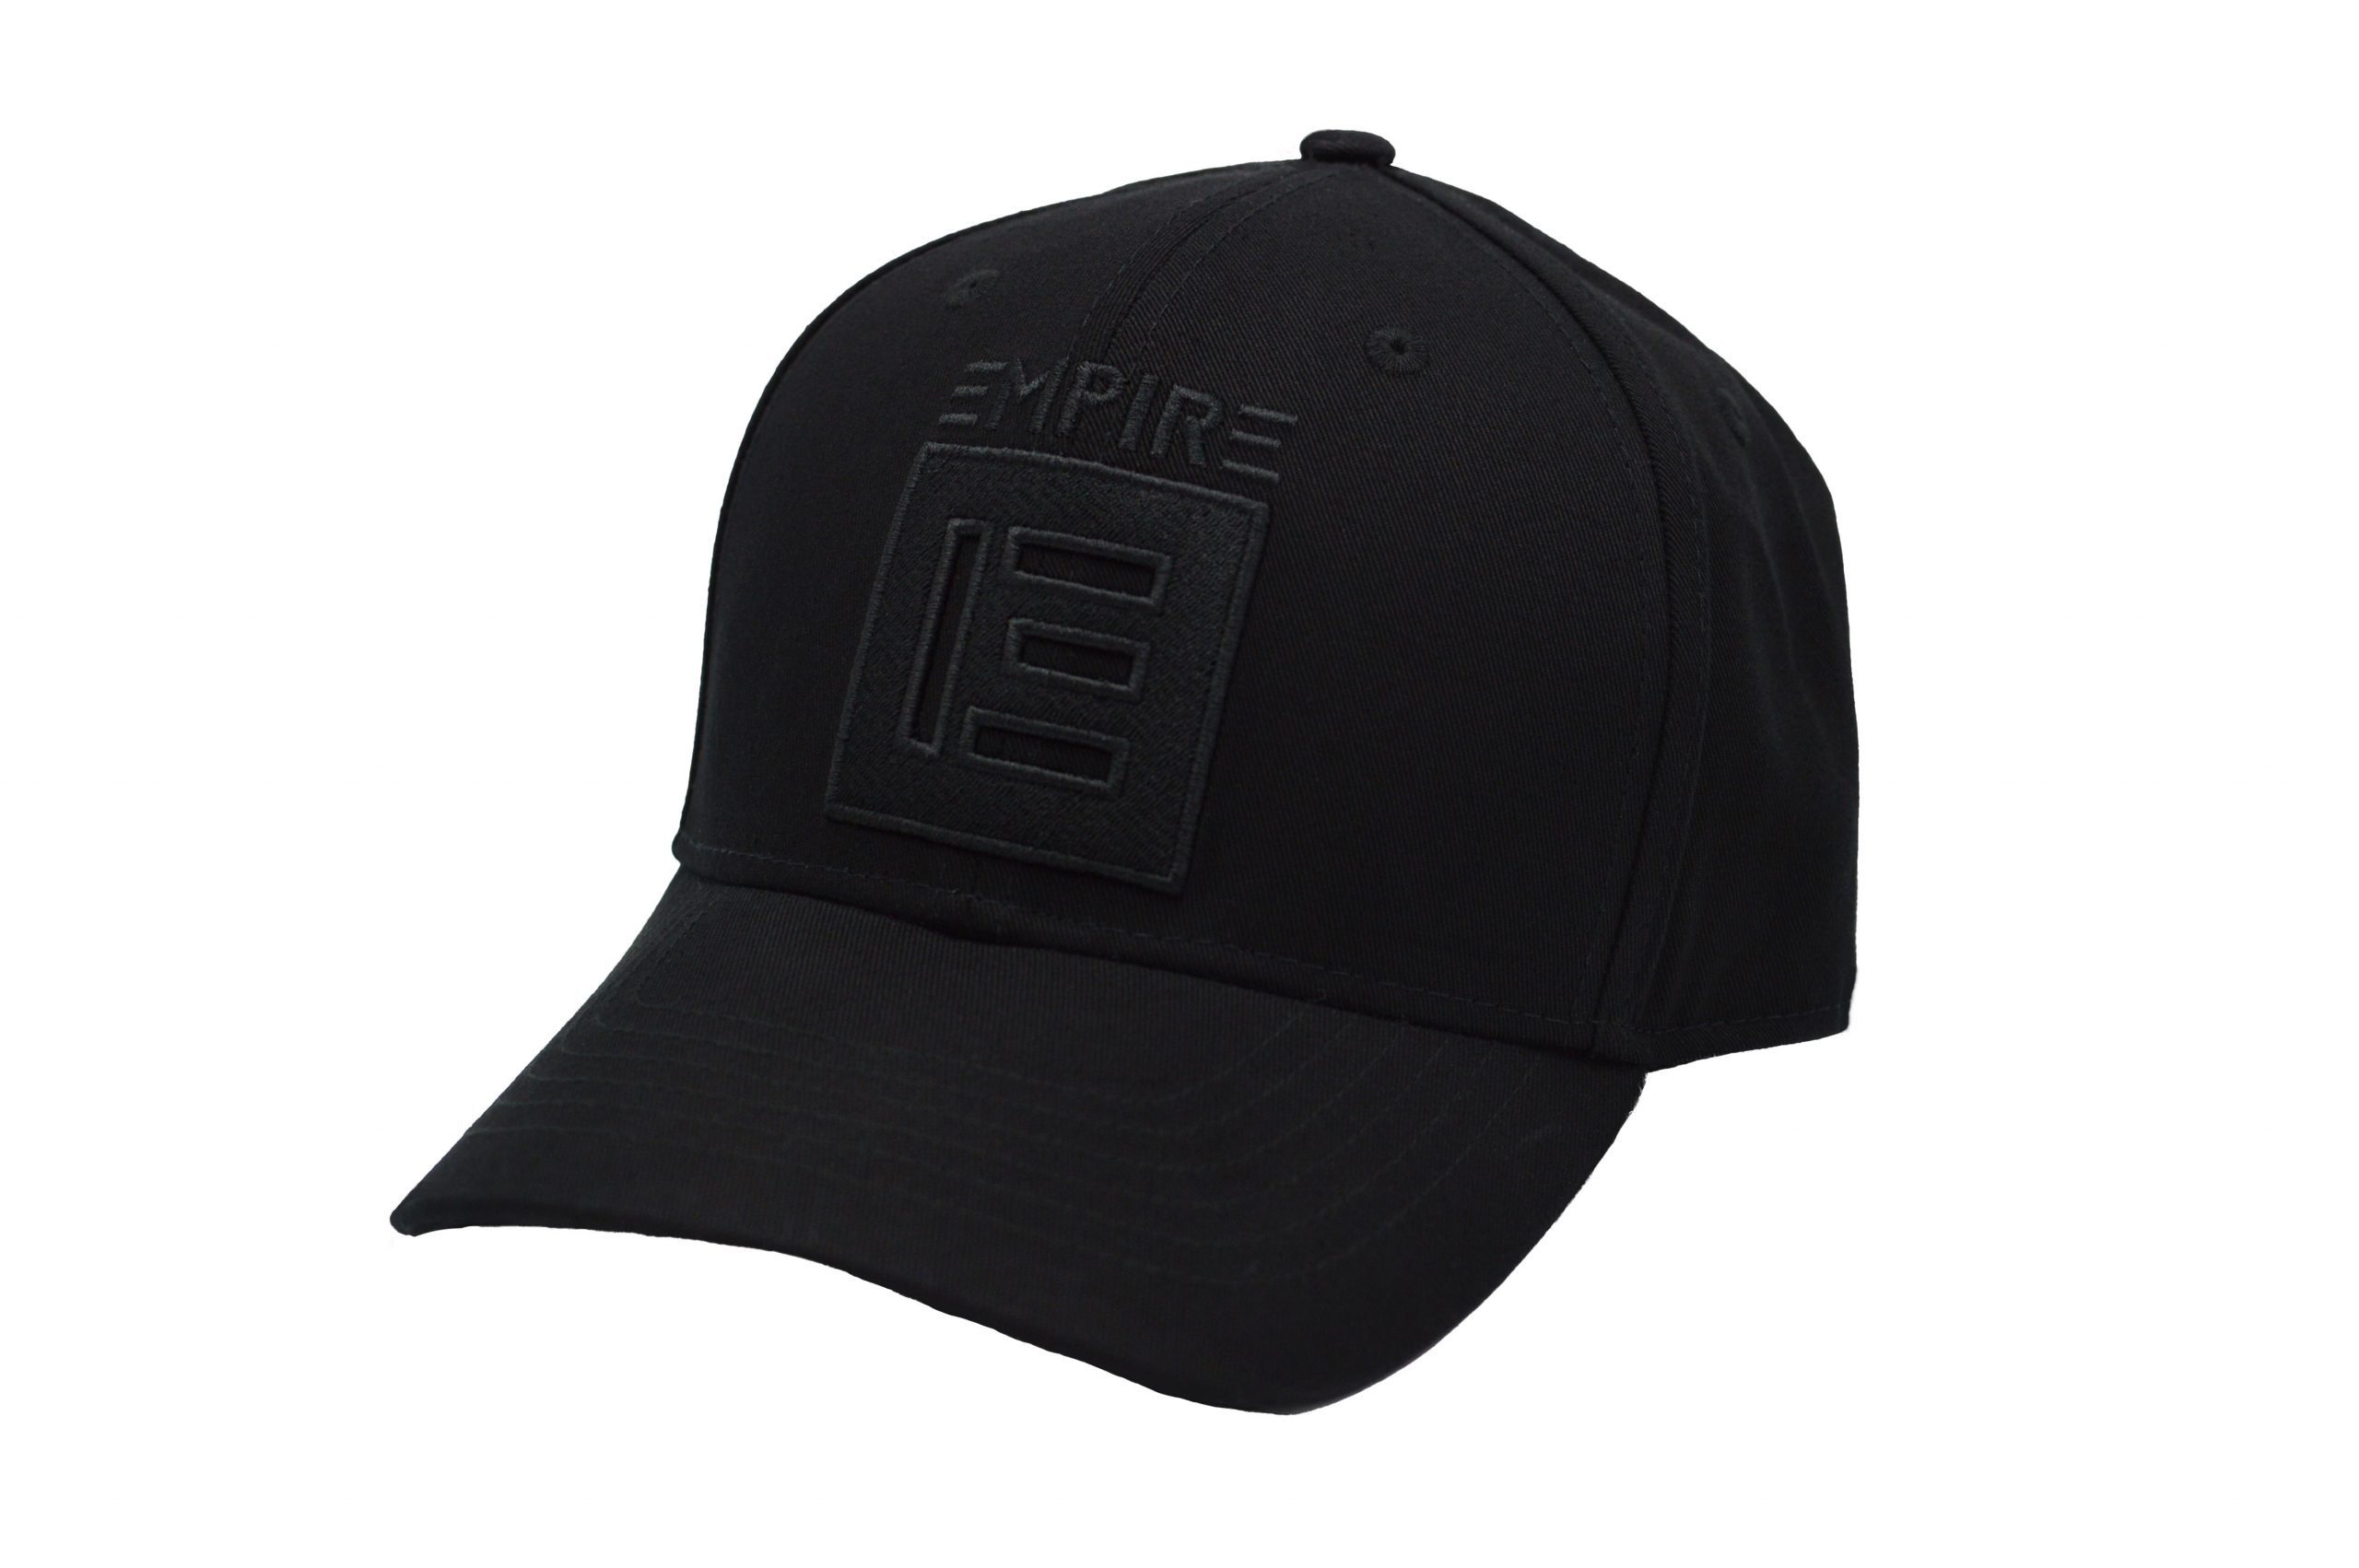 EMPIRE-THIRTEEN Baseball "EMPIRE" all CAP black Cap